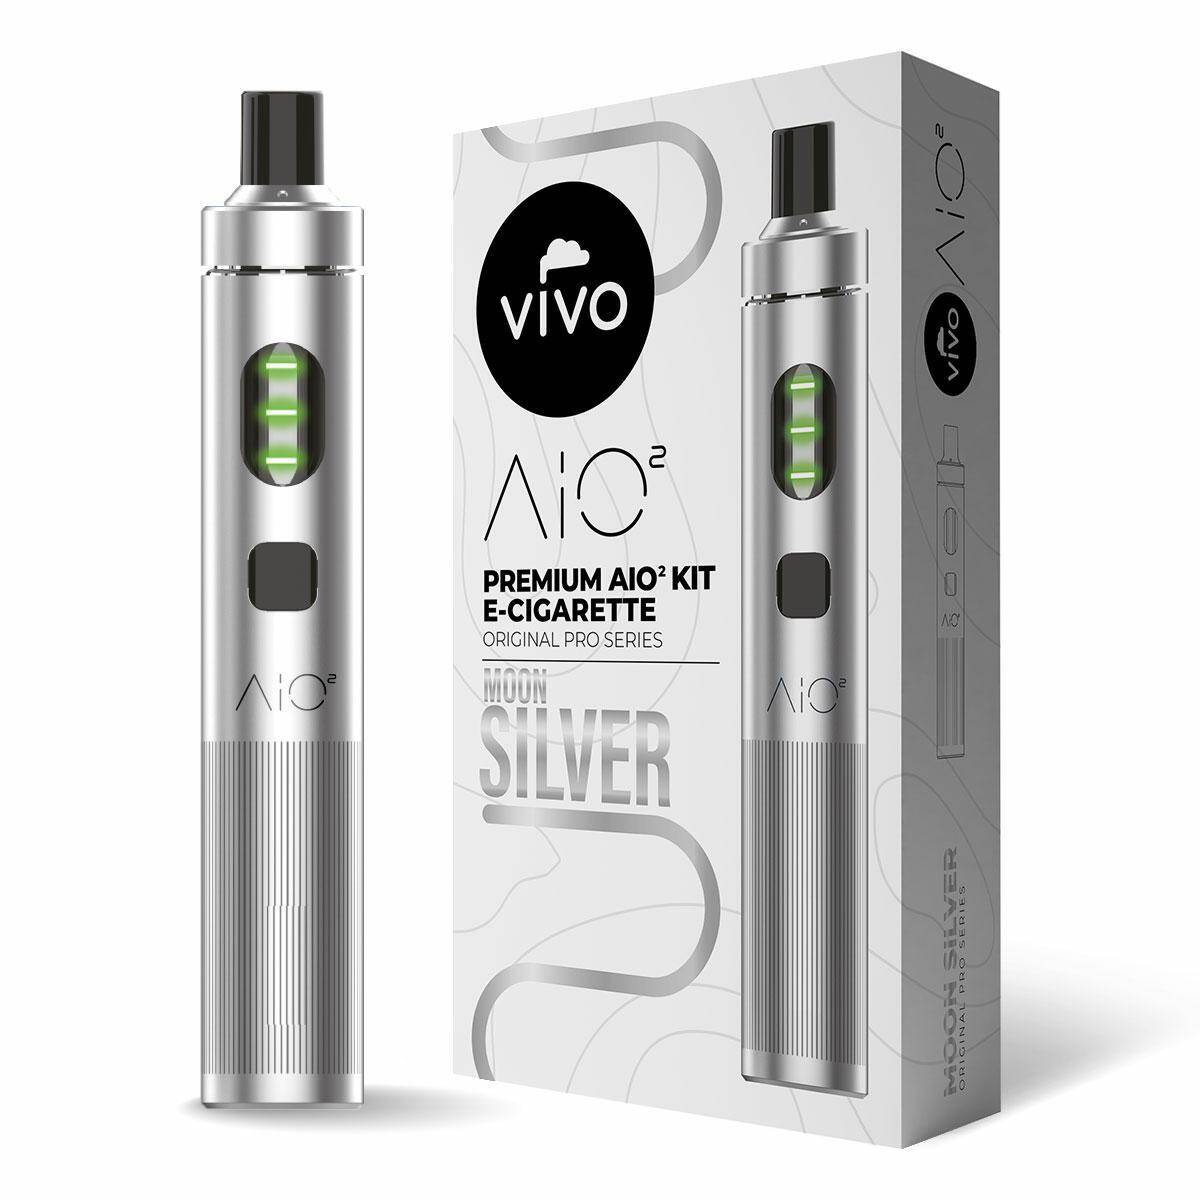 E-papieros VIVO AIO2 - ALL IN ONE (Silver)